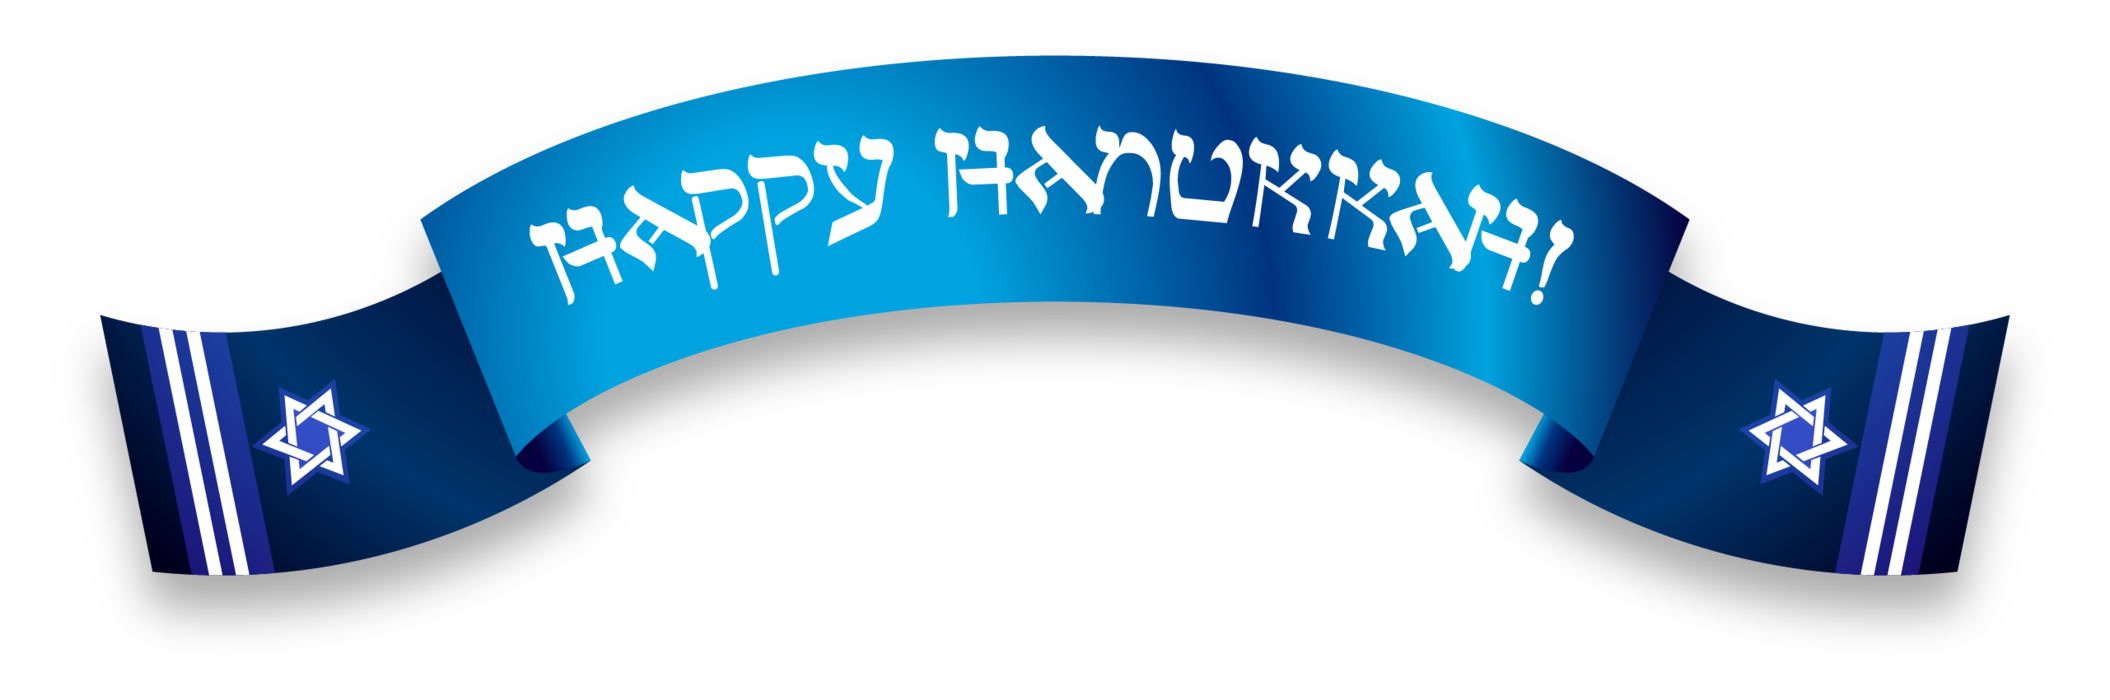 Happy Hanukkah Blue Banner